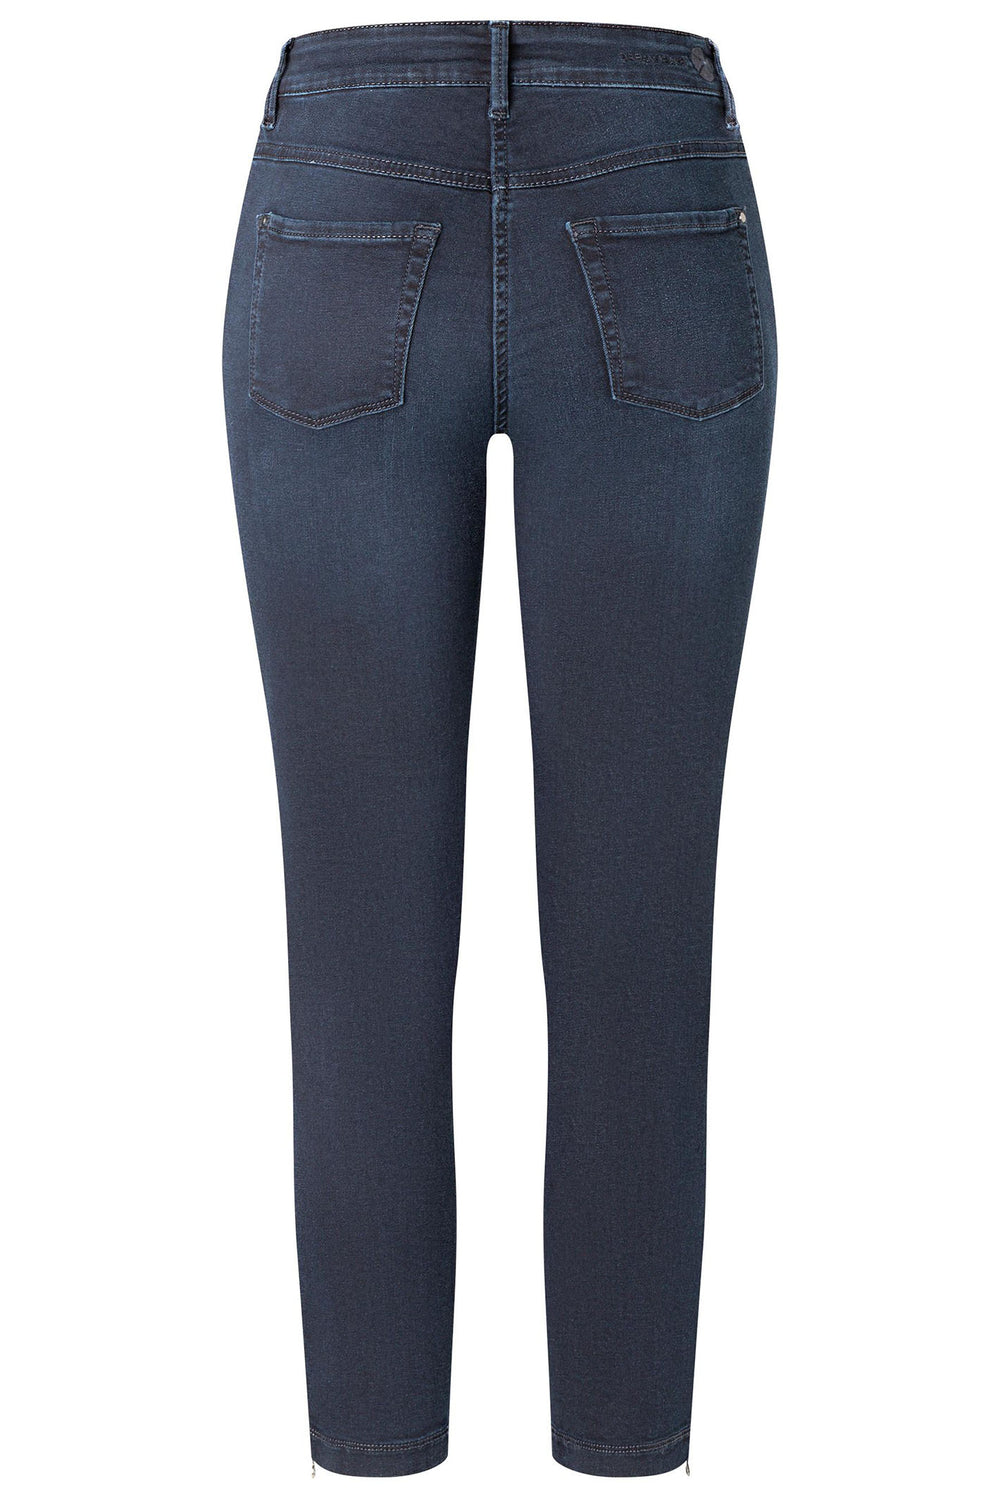 Mac Jeans Dream Chic Dark Blue Basic Wash 5471-90-0355 D883 - Shirley Allum Boutique